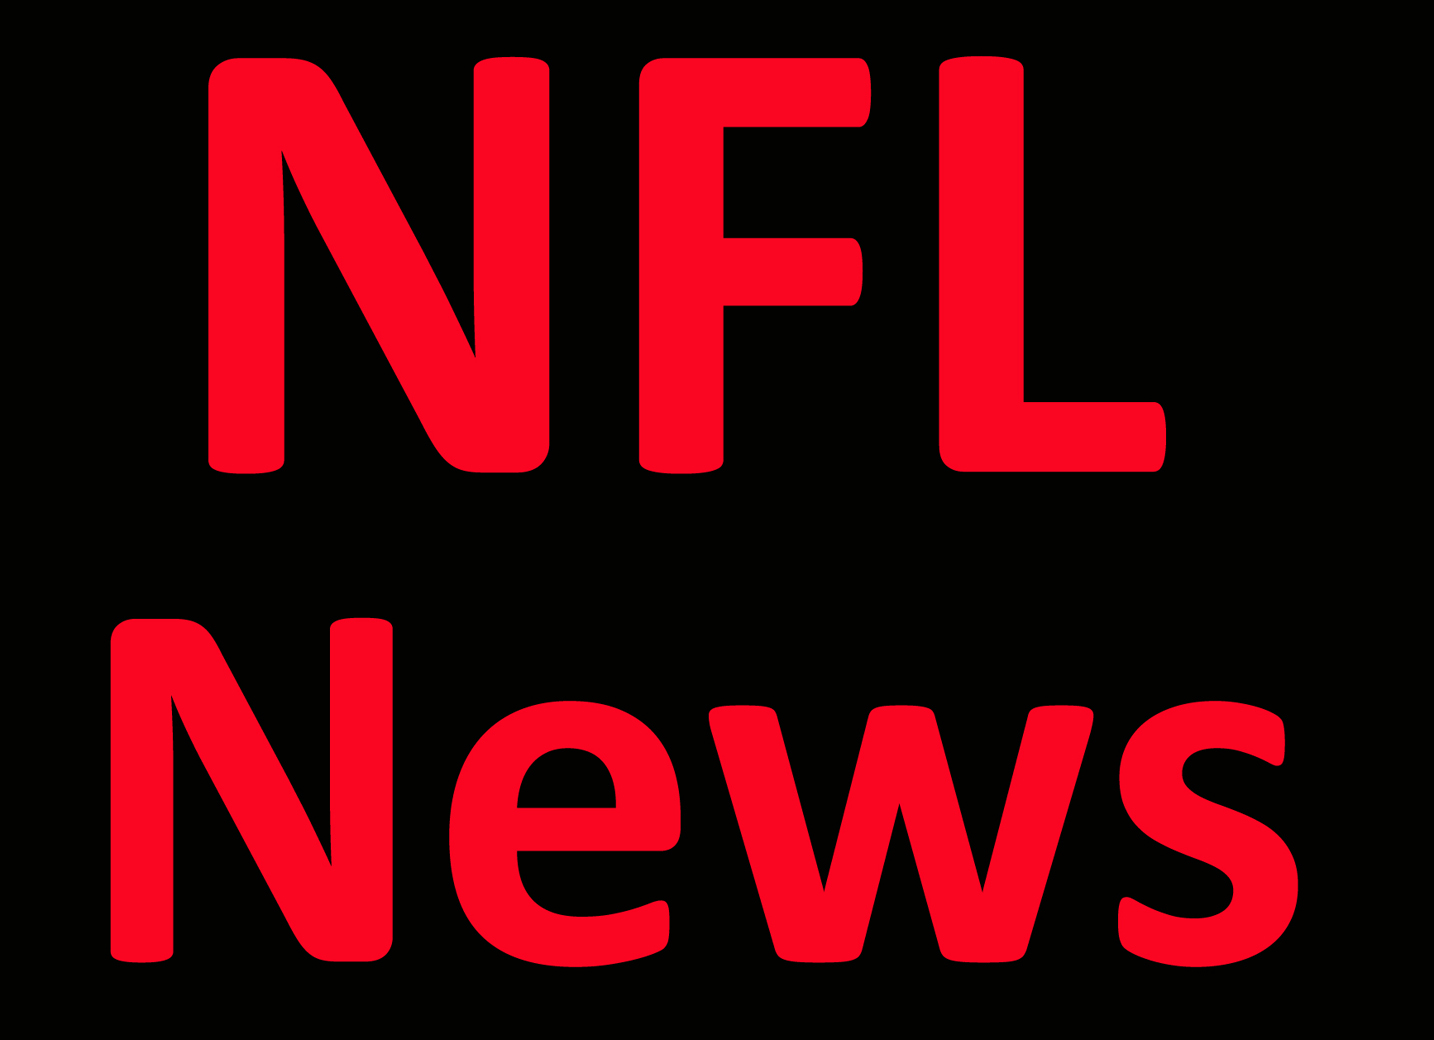 NFL News: Bundesliga, NFL eye growth with new partnership Per Report